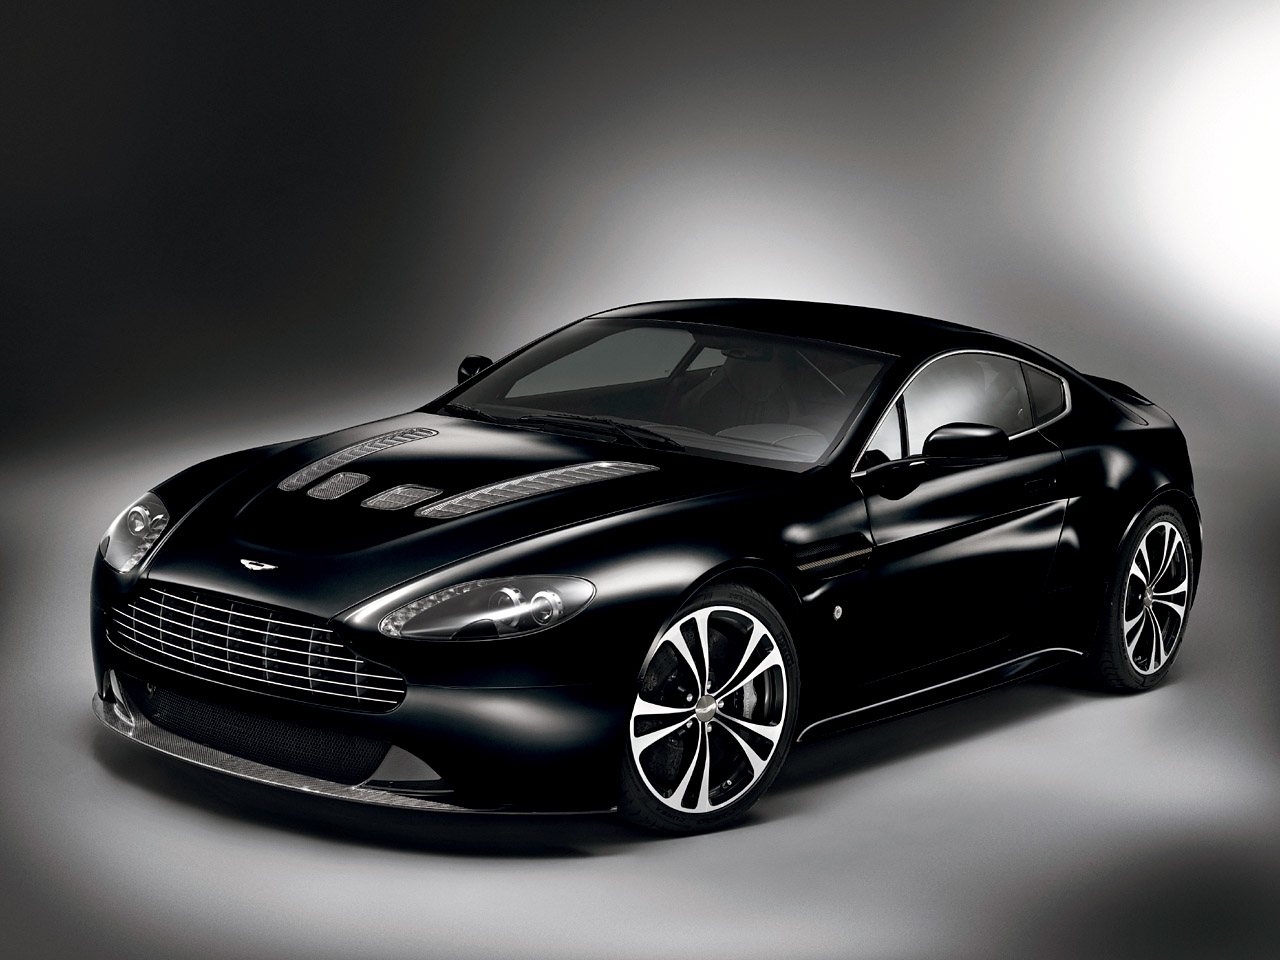 Godric's Car Aston Martin V12 Vantage